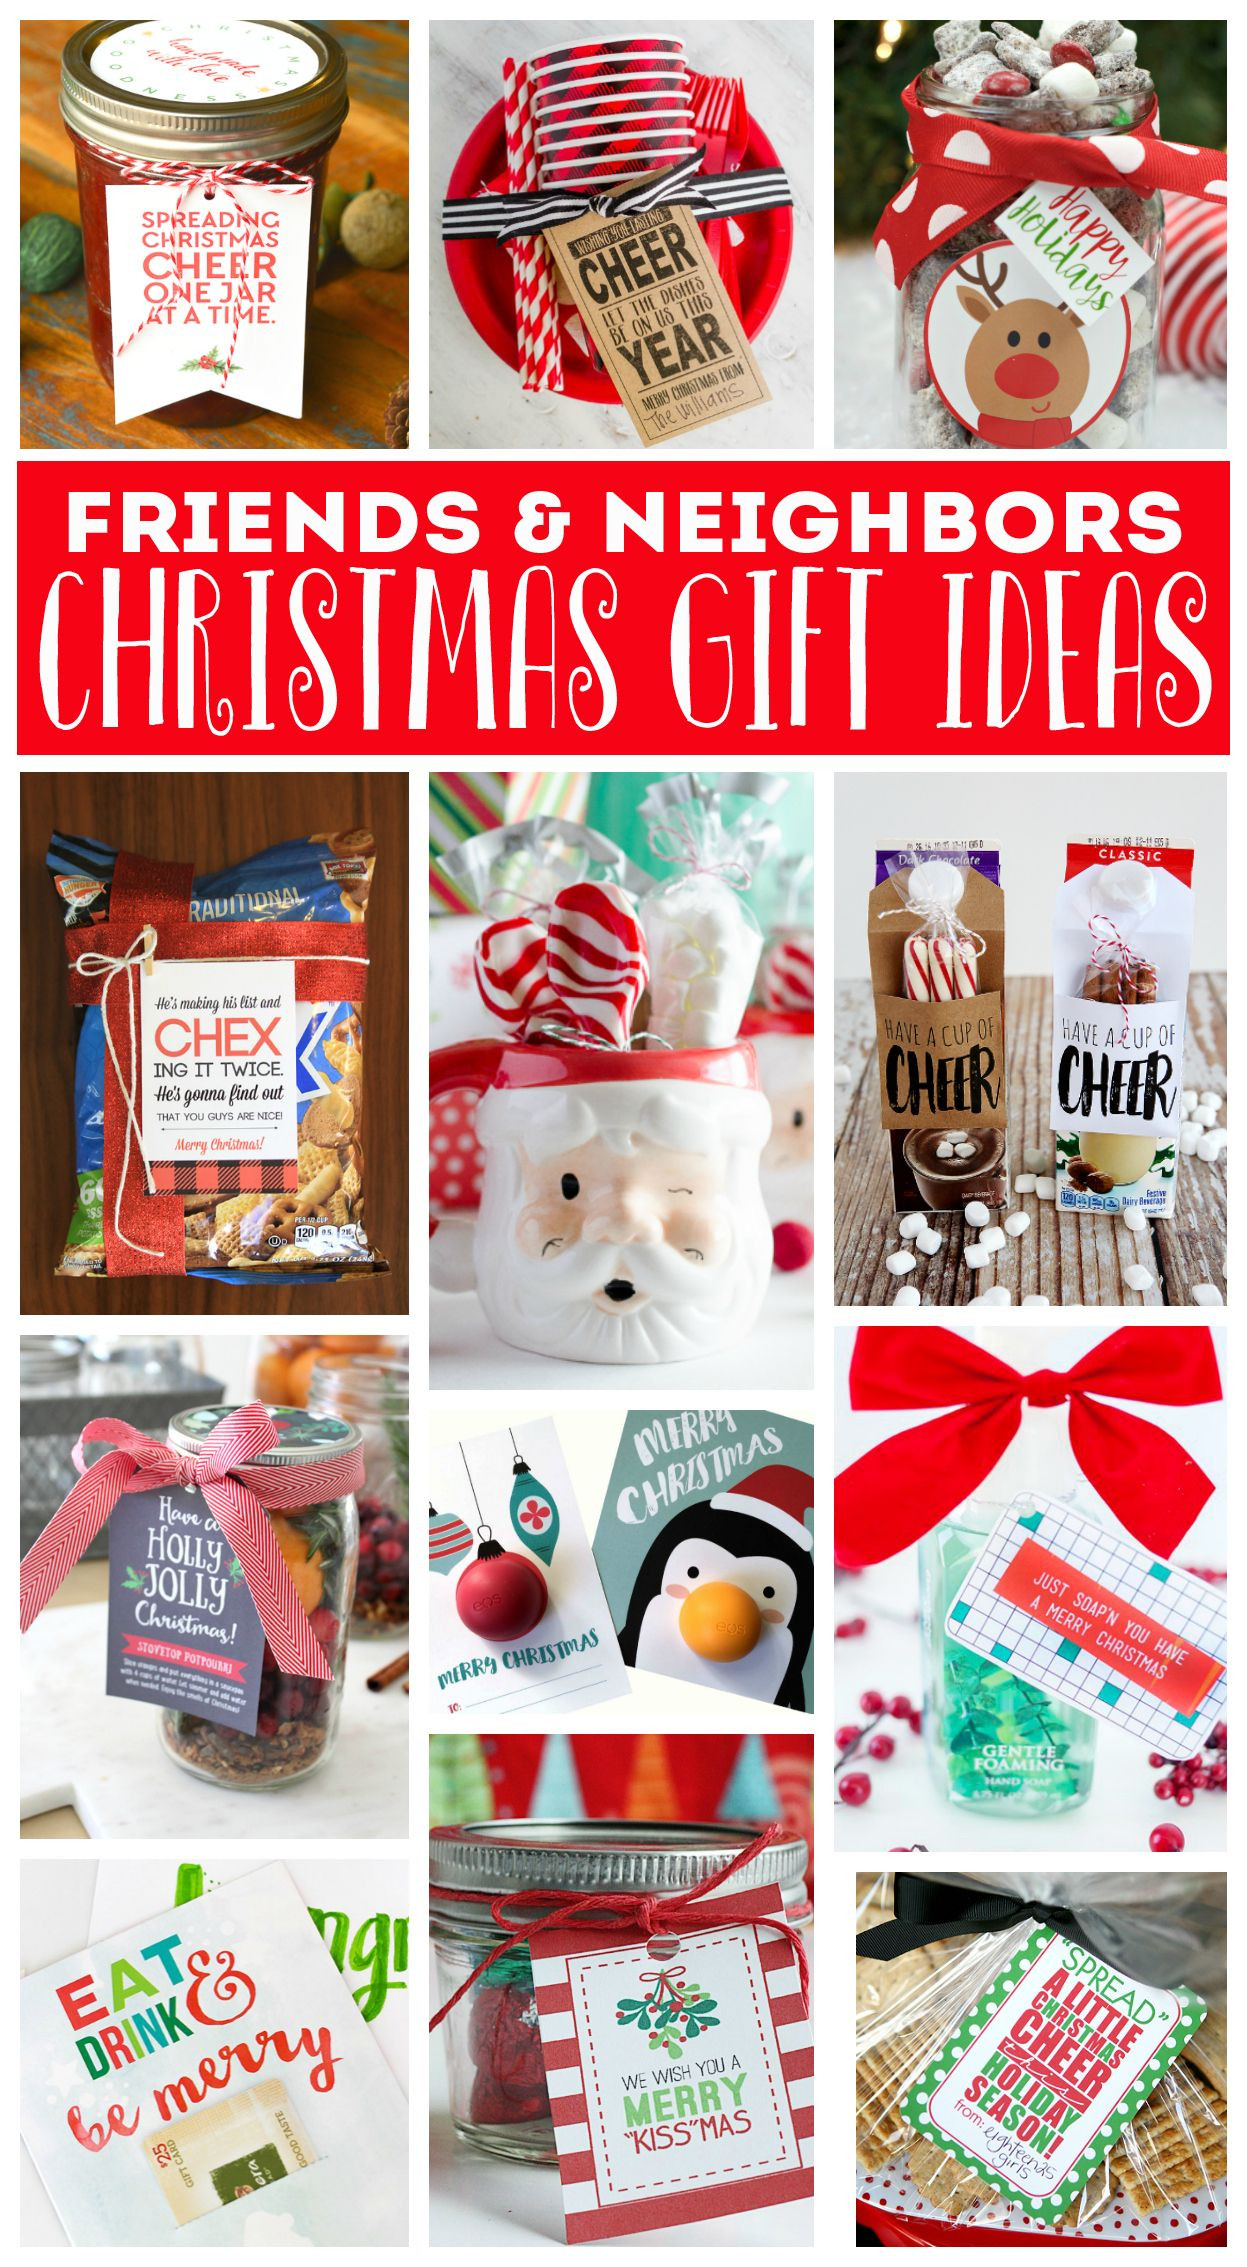 Neighborhood Christmas Gift Ideas
 Neighbor Christmas Gifts Everyone Is Sure To Love